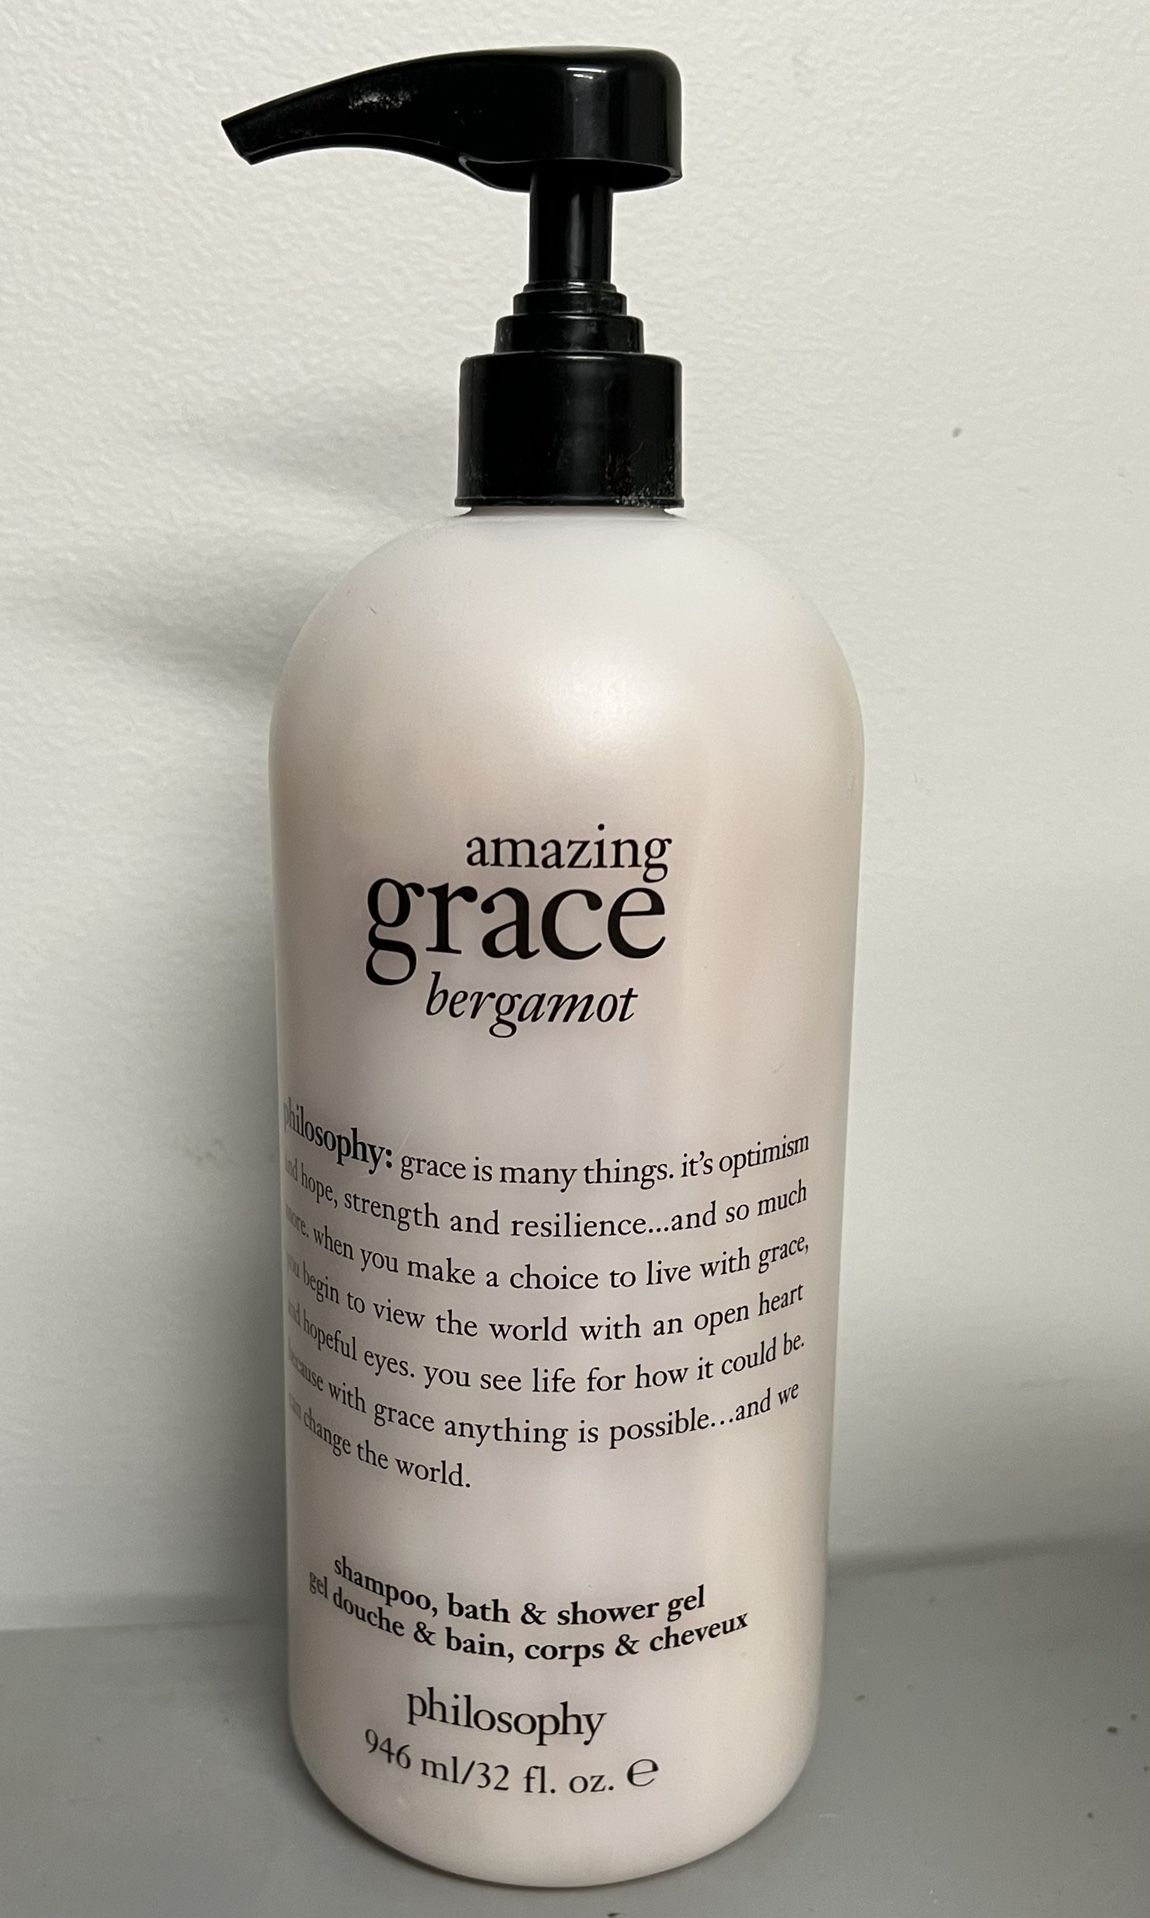 Philosophy Amazing Grace Bergamot Shampoo Bath & Shower Gel 